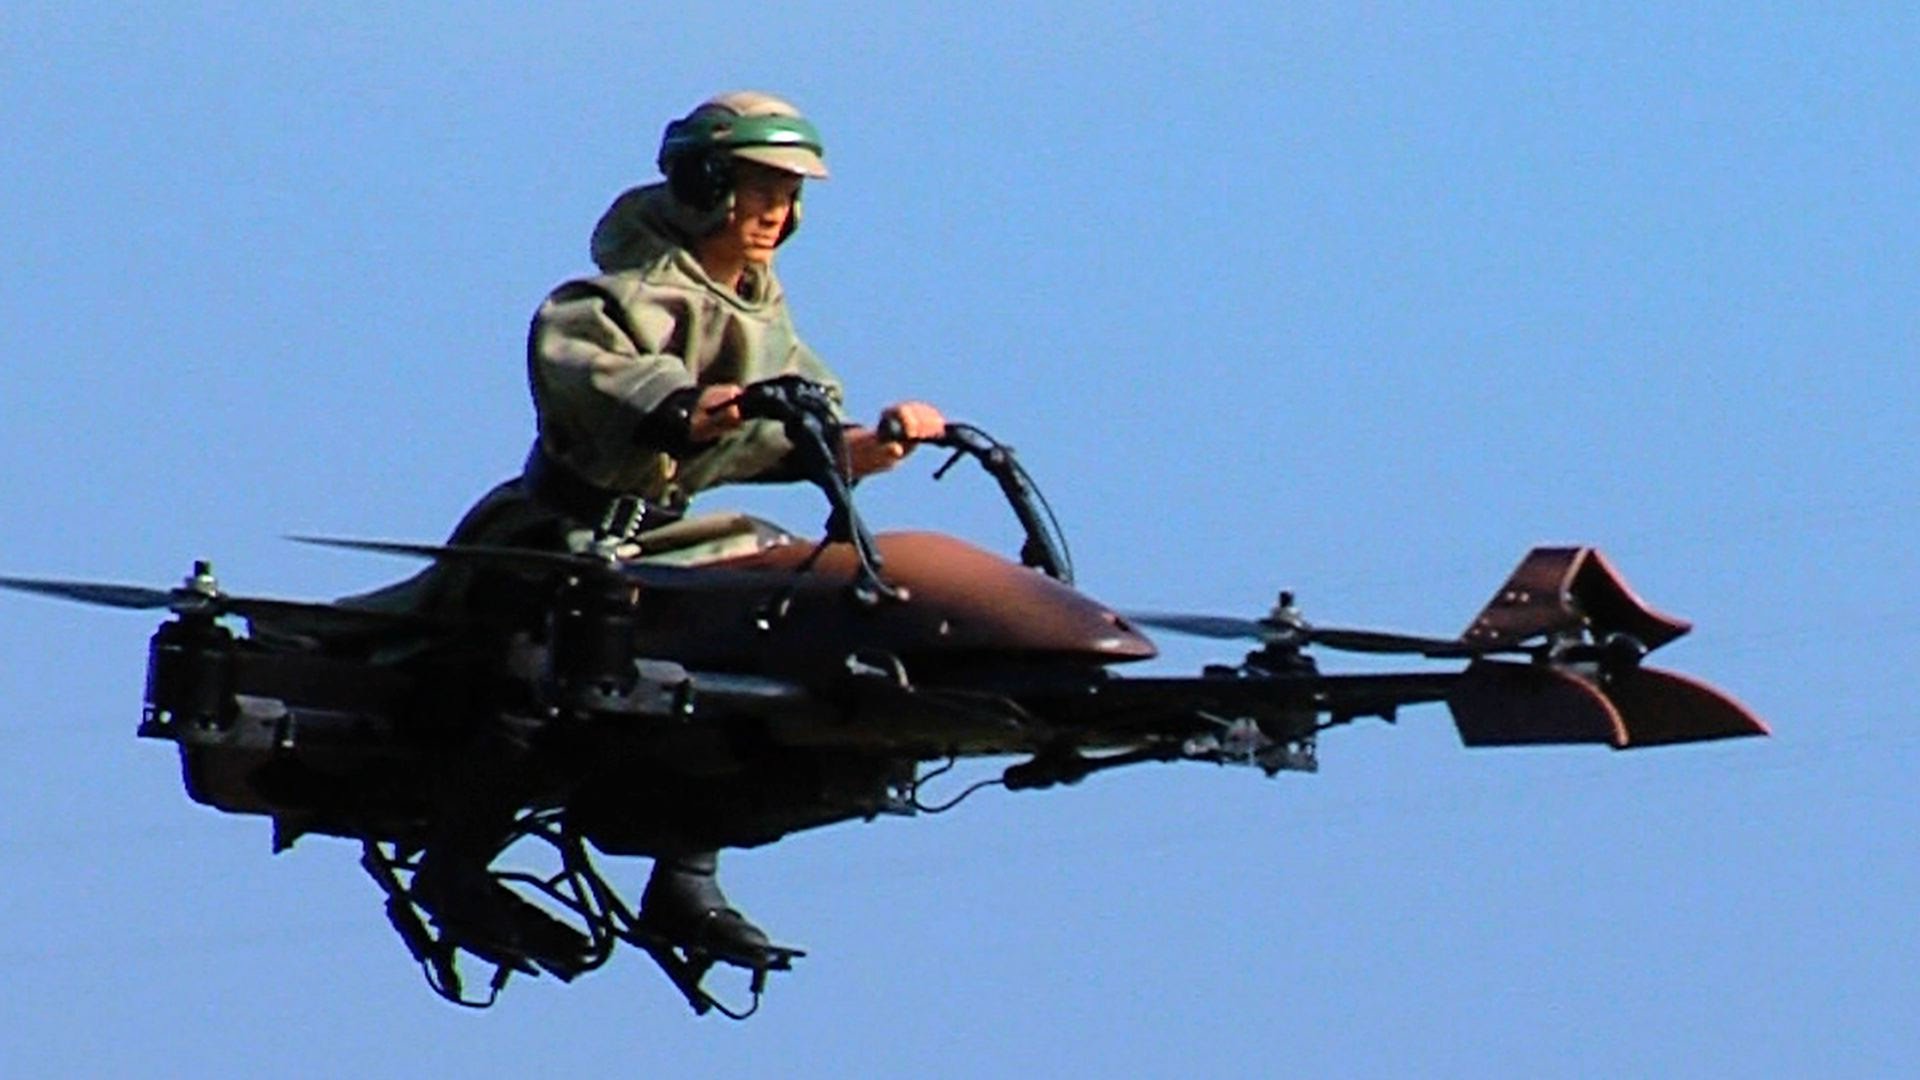 Star Wars Flying Speeder Bike is RC quadcopter - YouTube